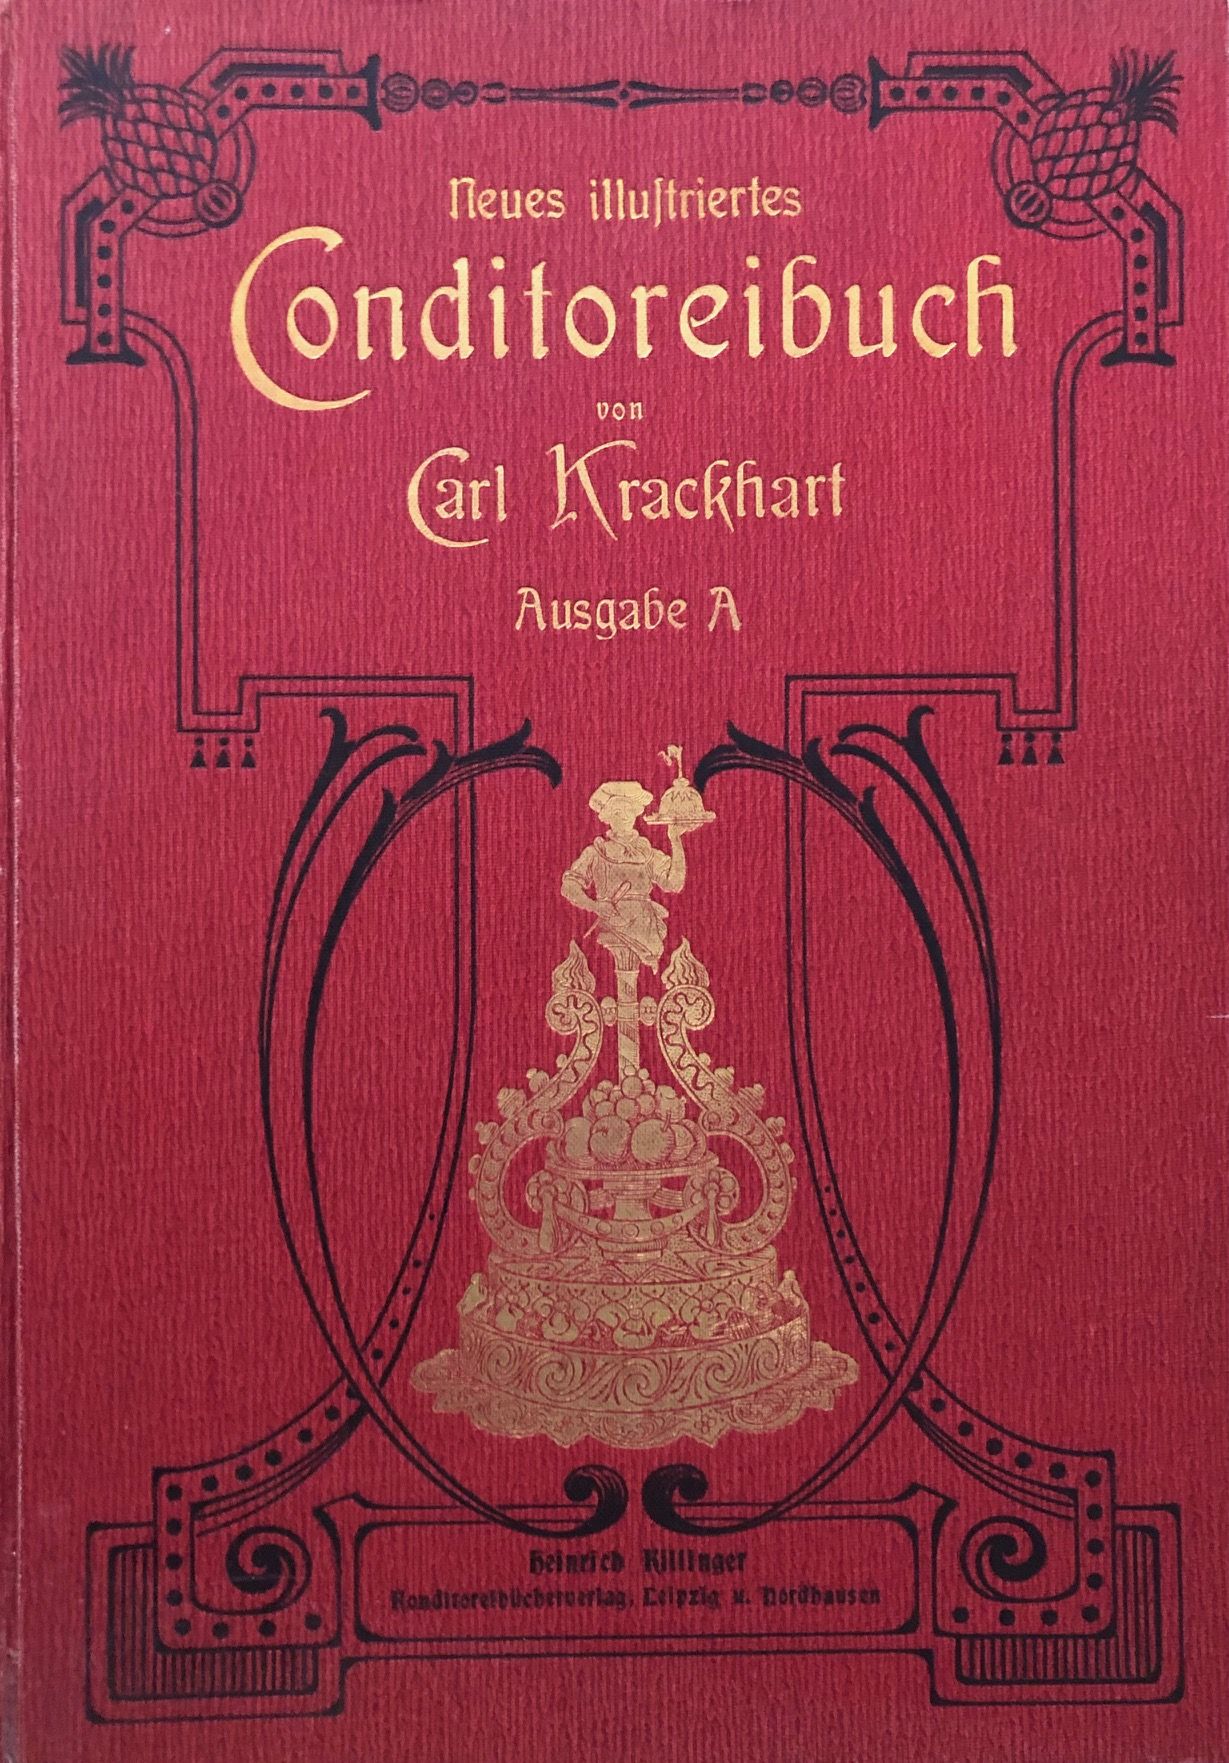 (Confectionery) Carl Krackhart. Neues Illustriertes Conditoreibuch